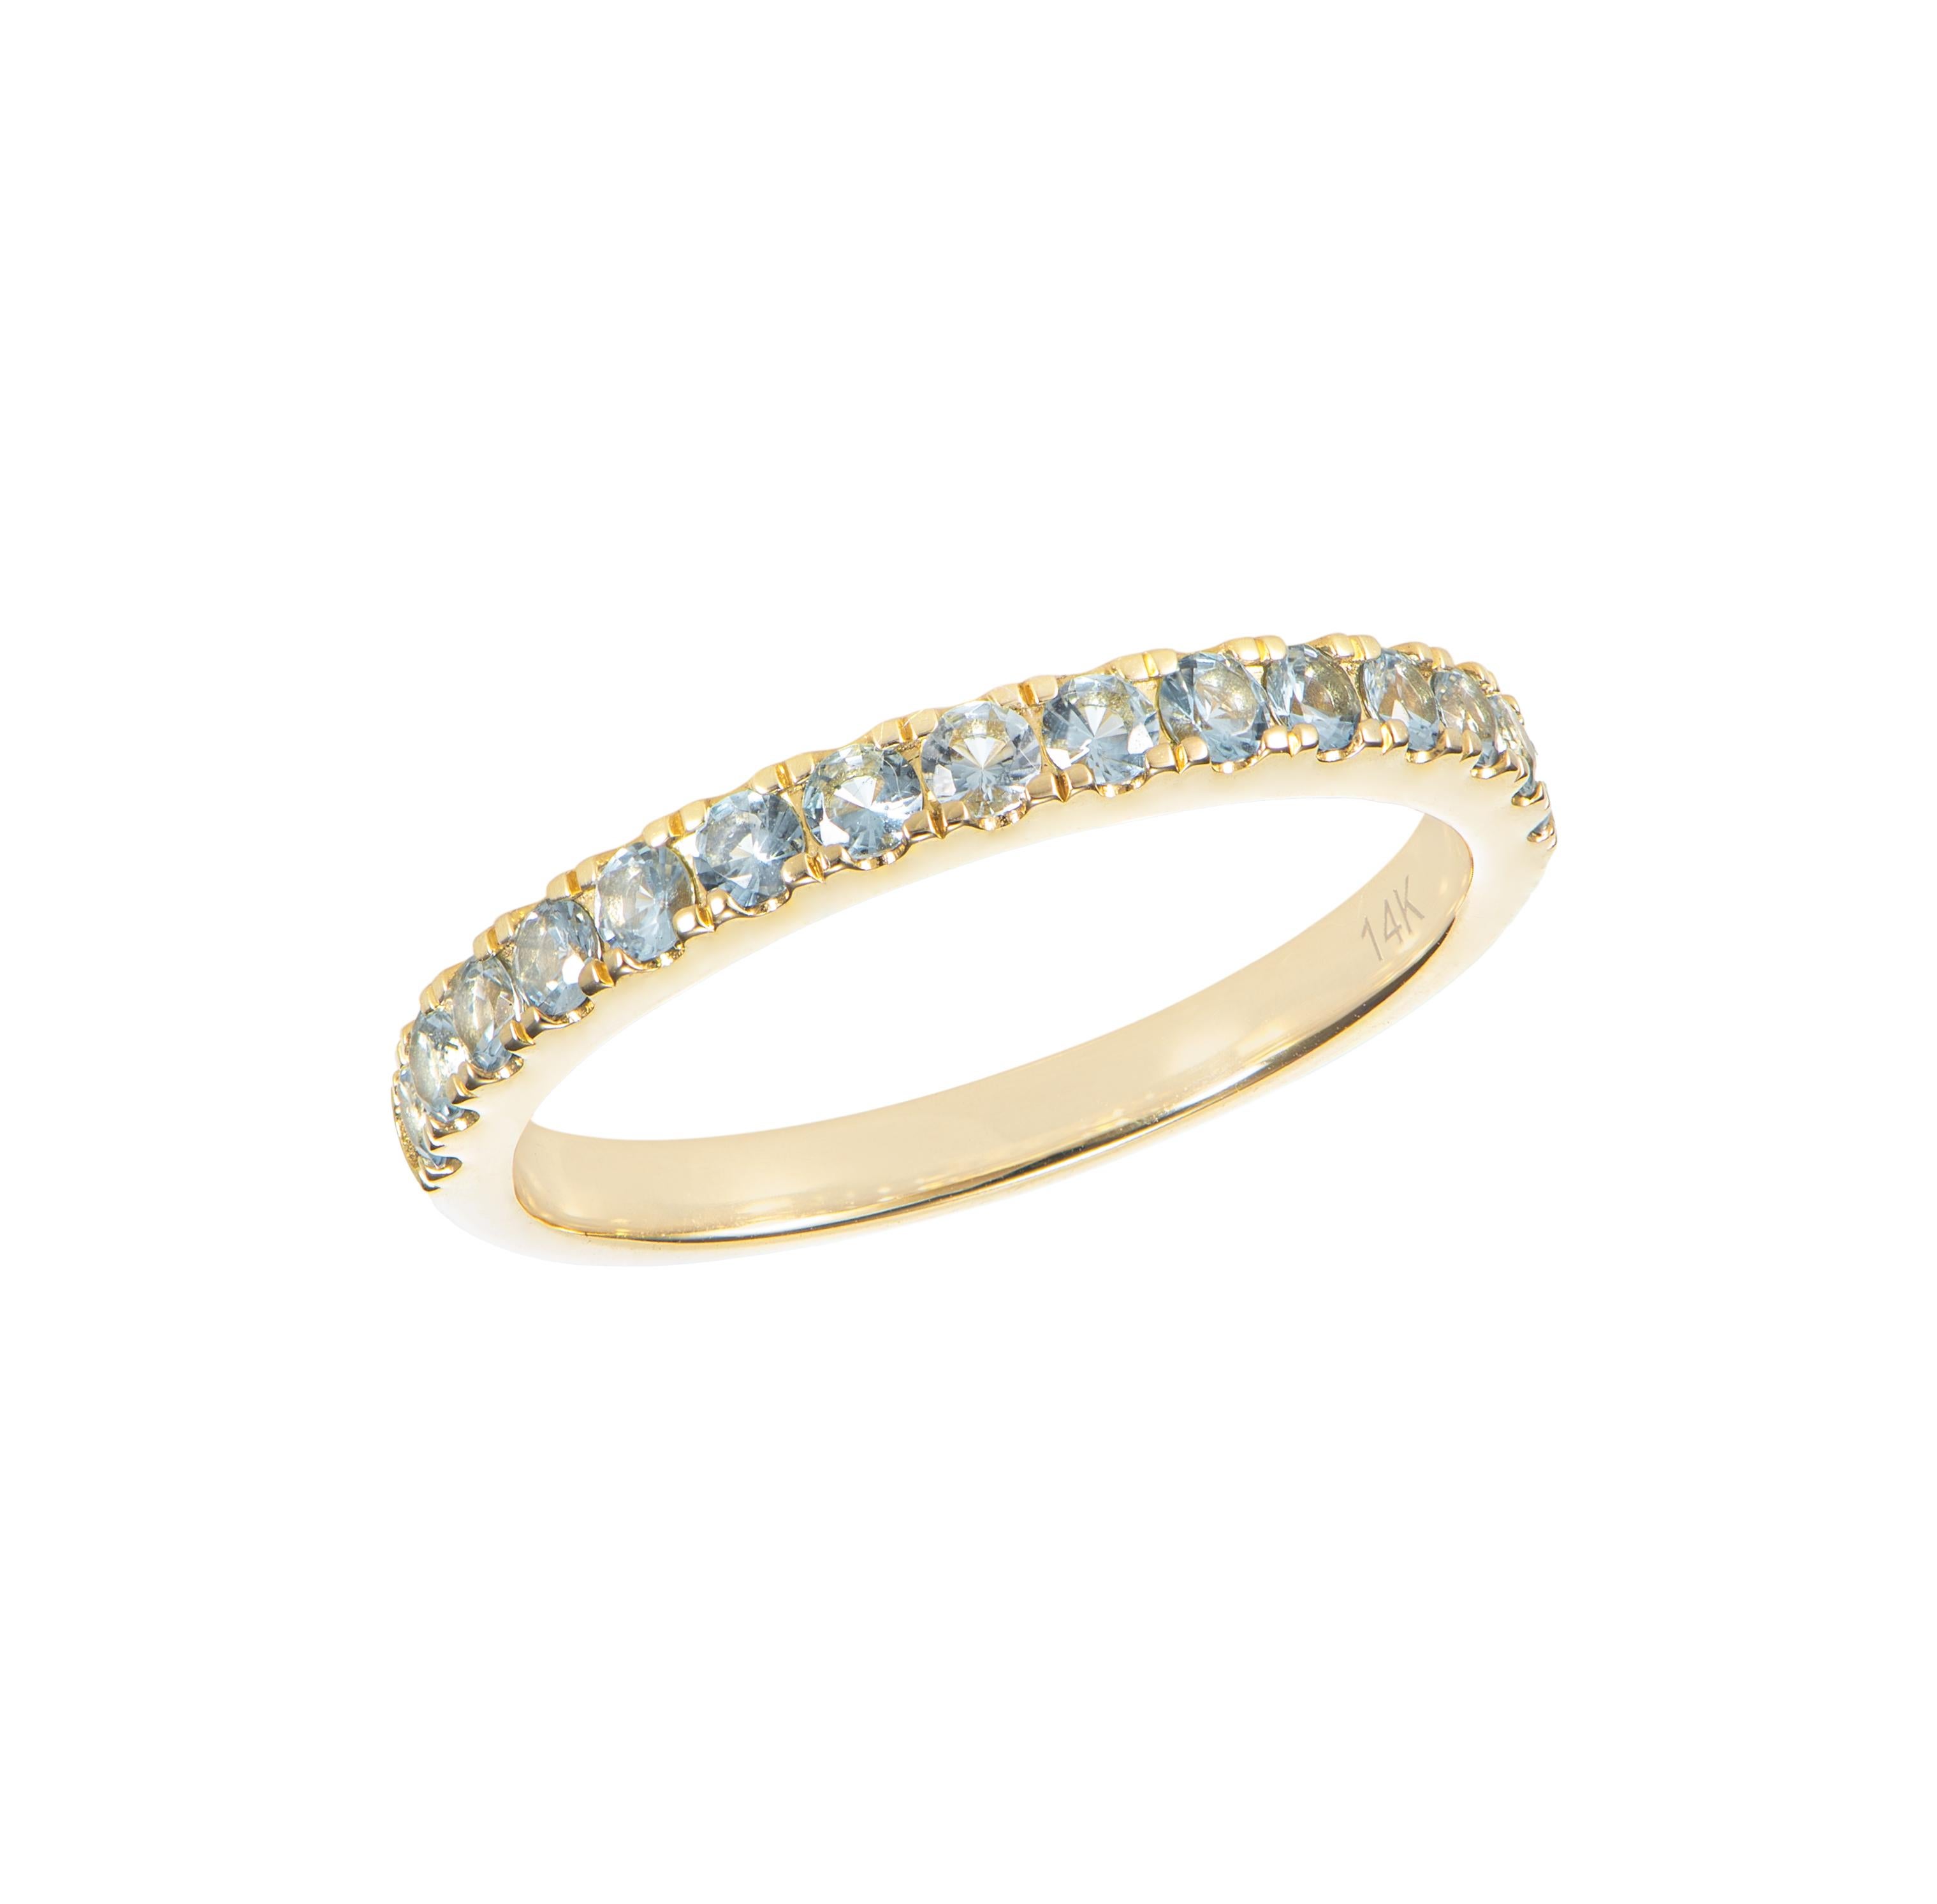 Round Cut 0.61 Carat Sky Blue Topaz Eternity Ring in 14Karat Yellow Gold. For Sale